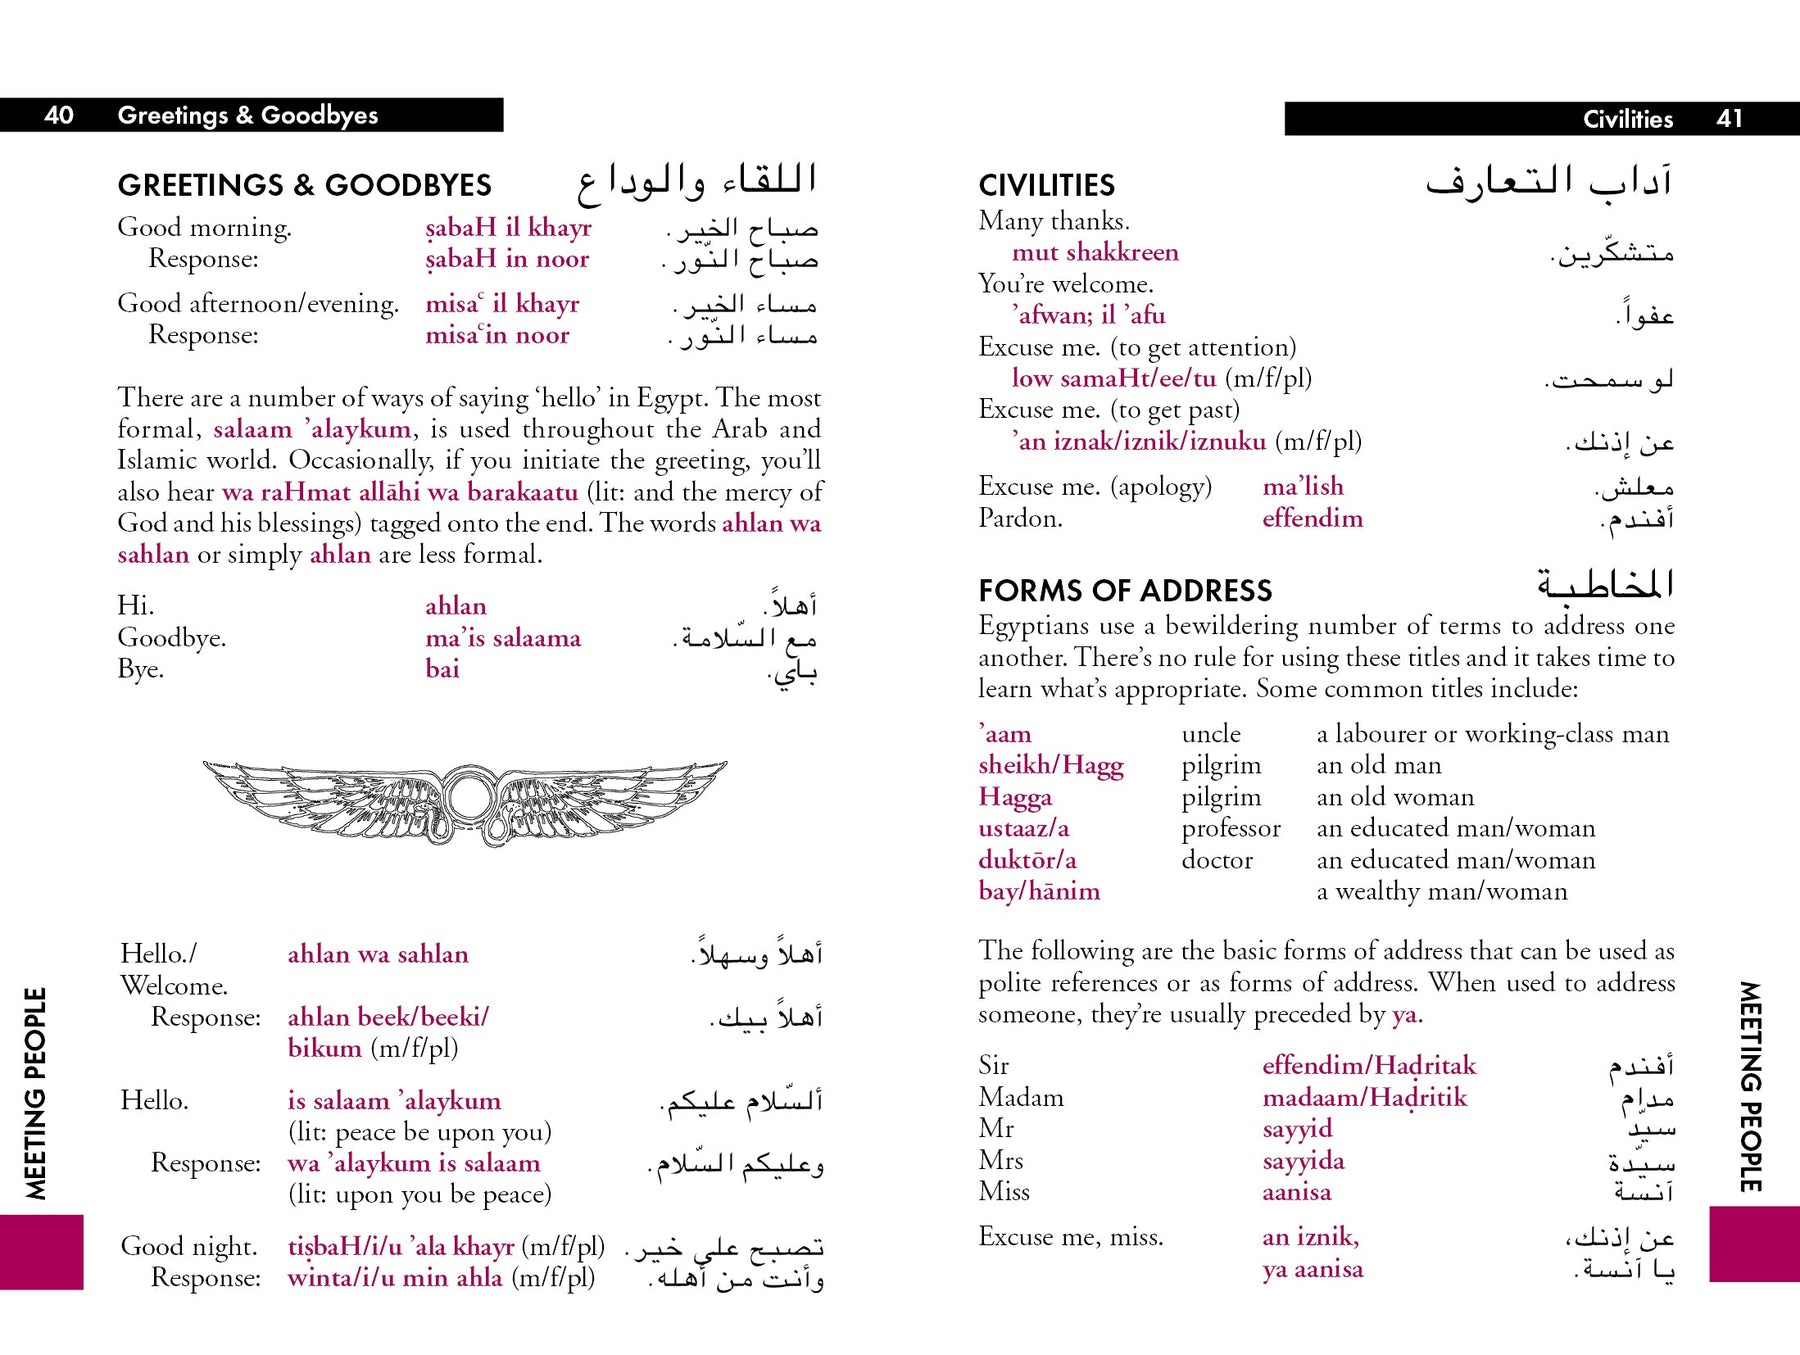 Egyptian Arabic Phrasebook & Dictionary - Book